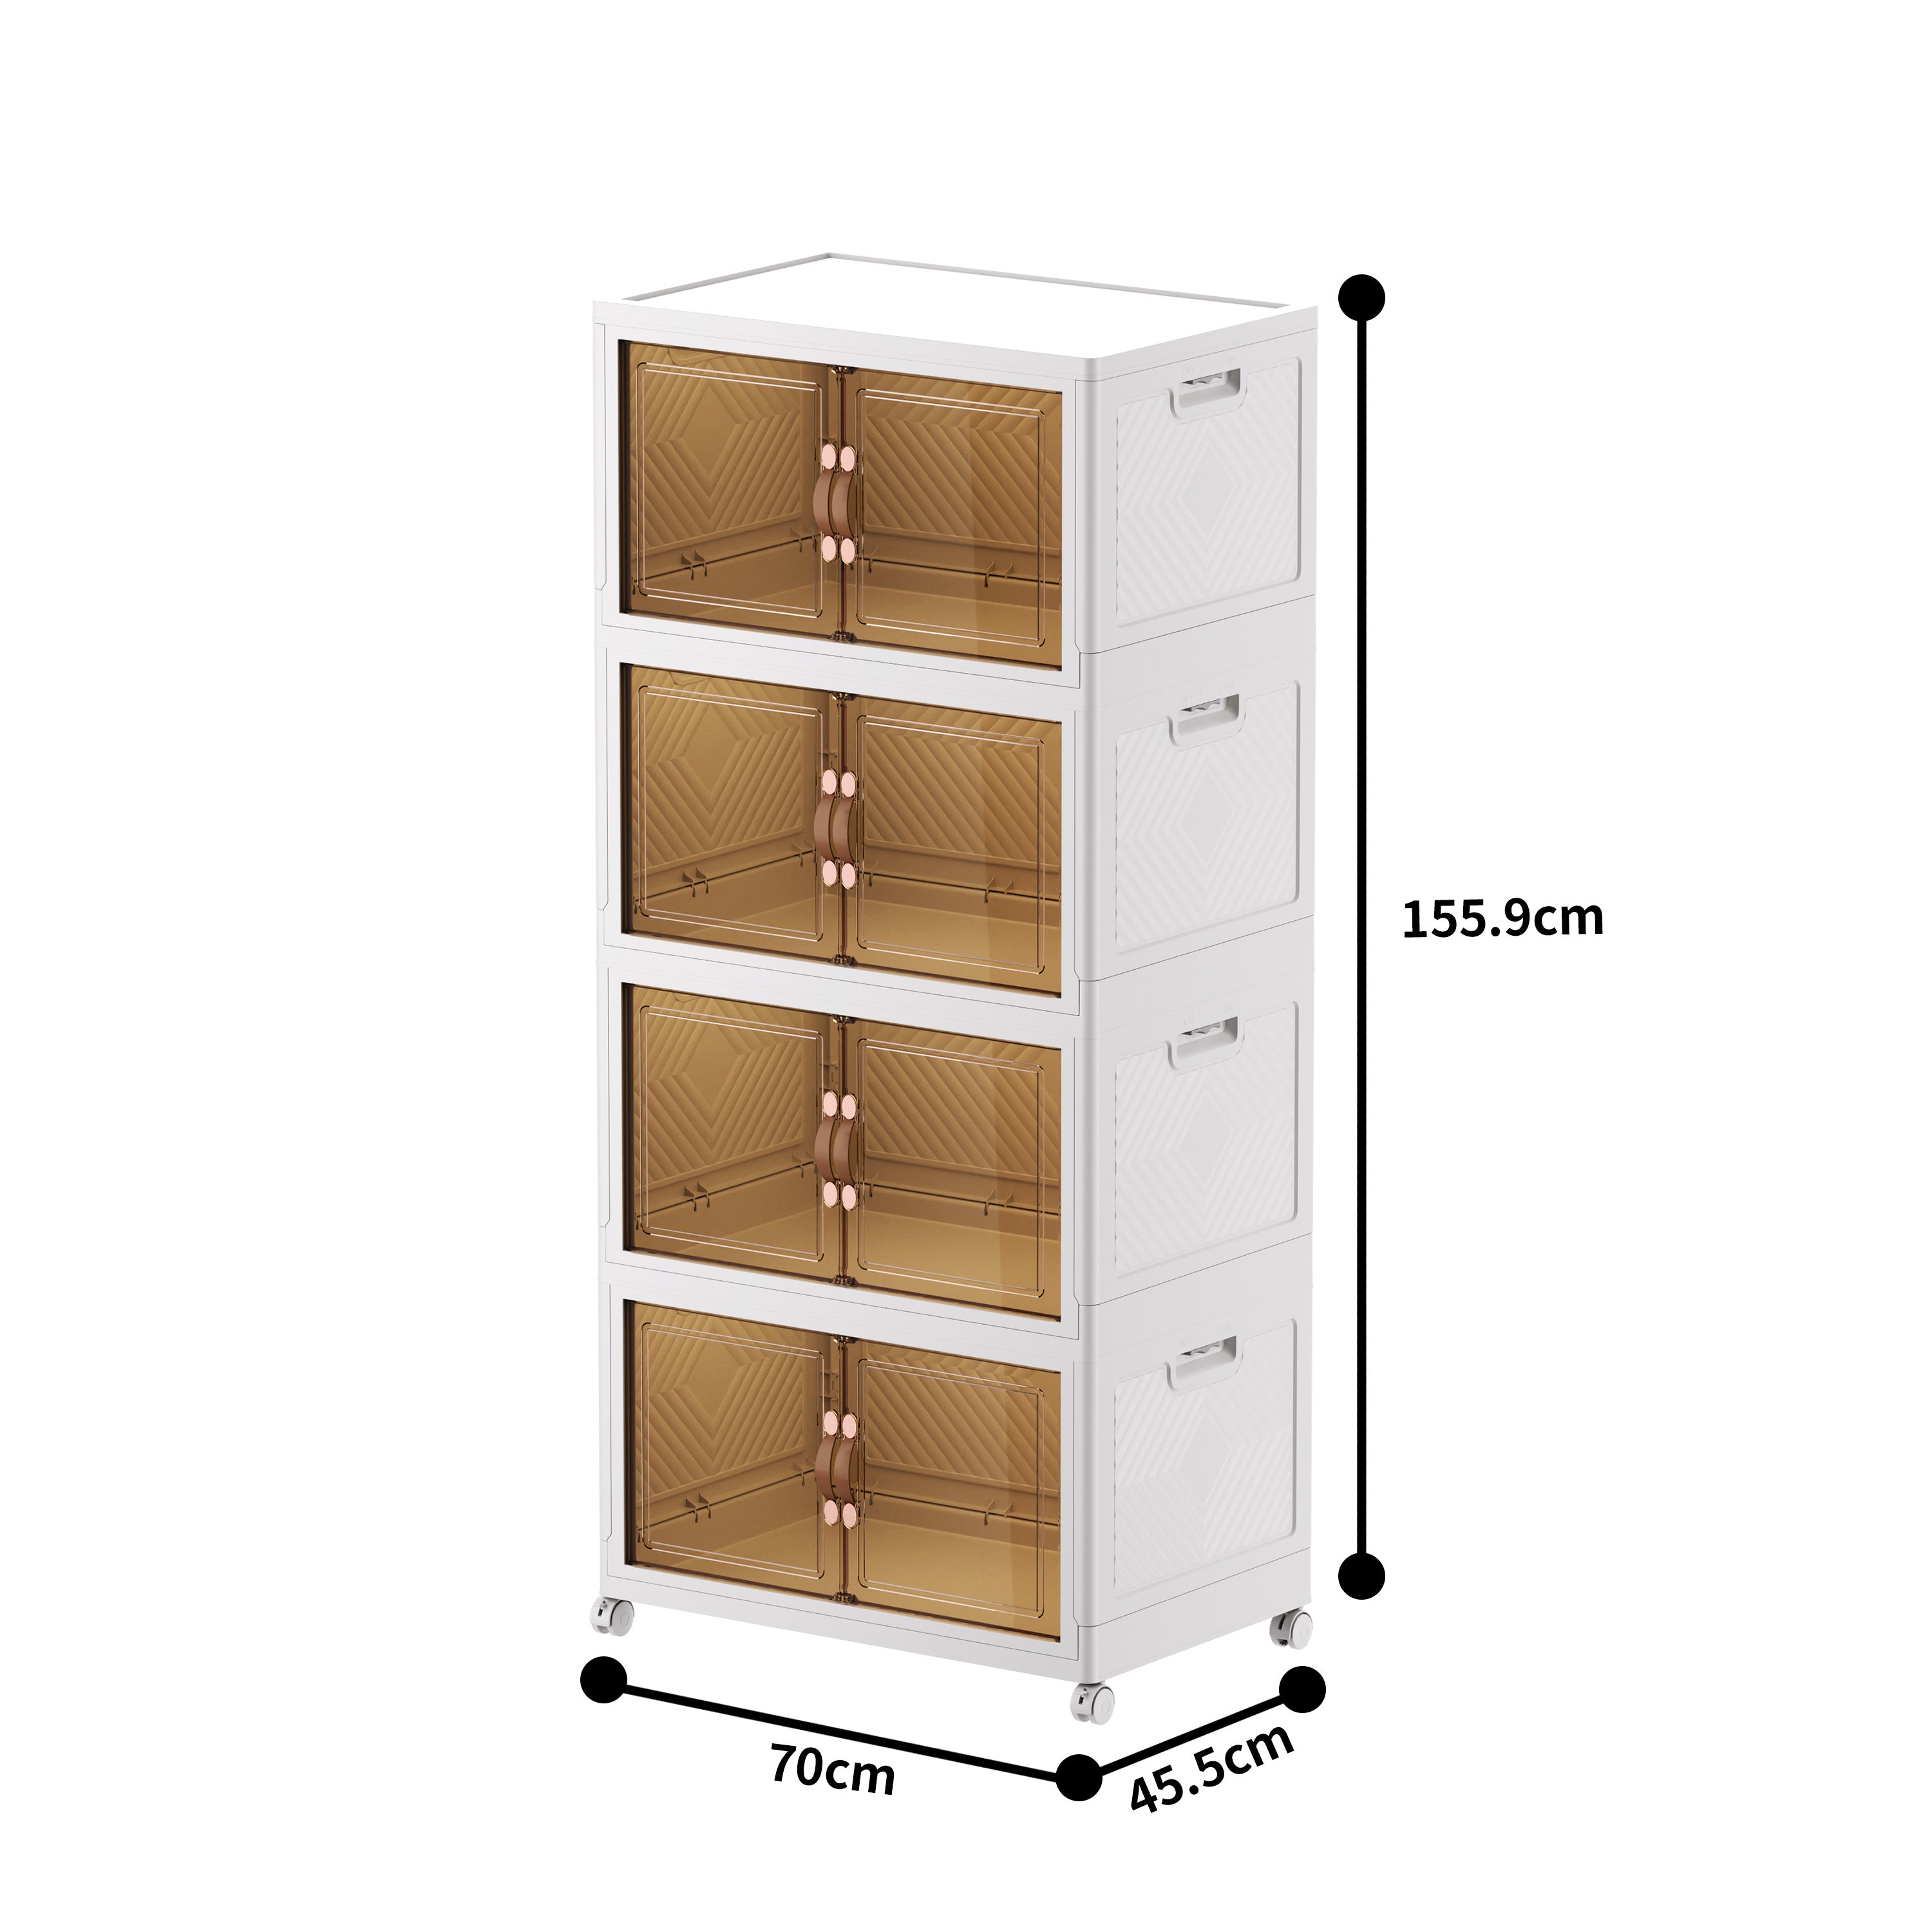 【KSA STOCK】Foldable plastic storage box with wheels and doors, four shelves, large size 156*70 cm NK008